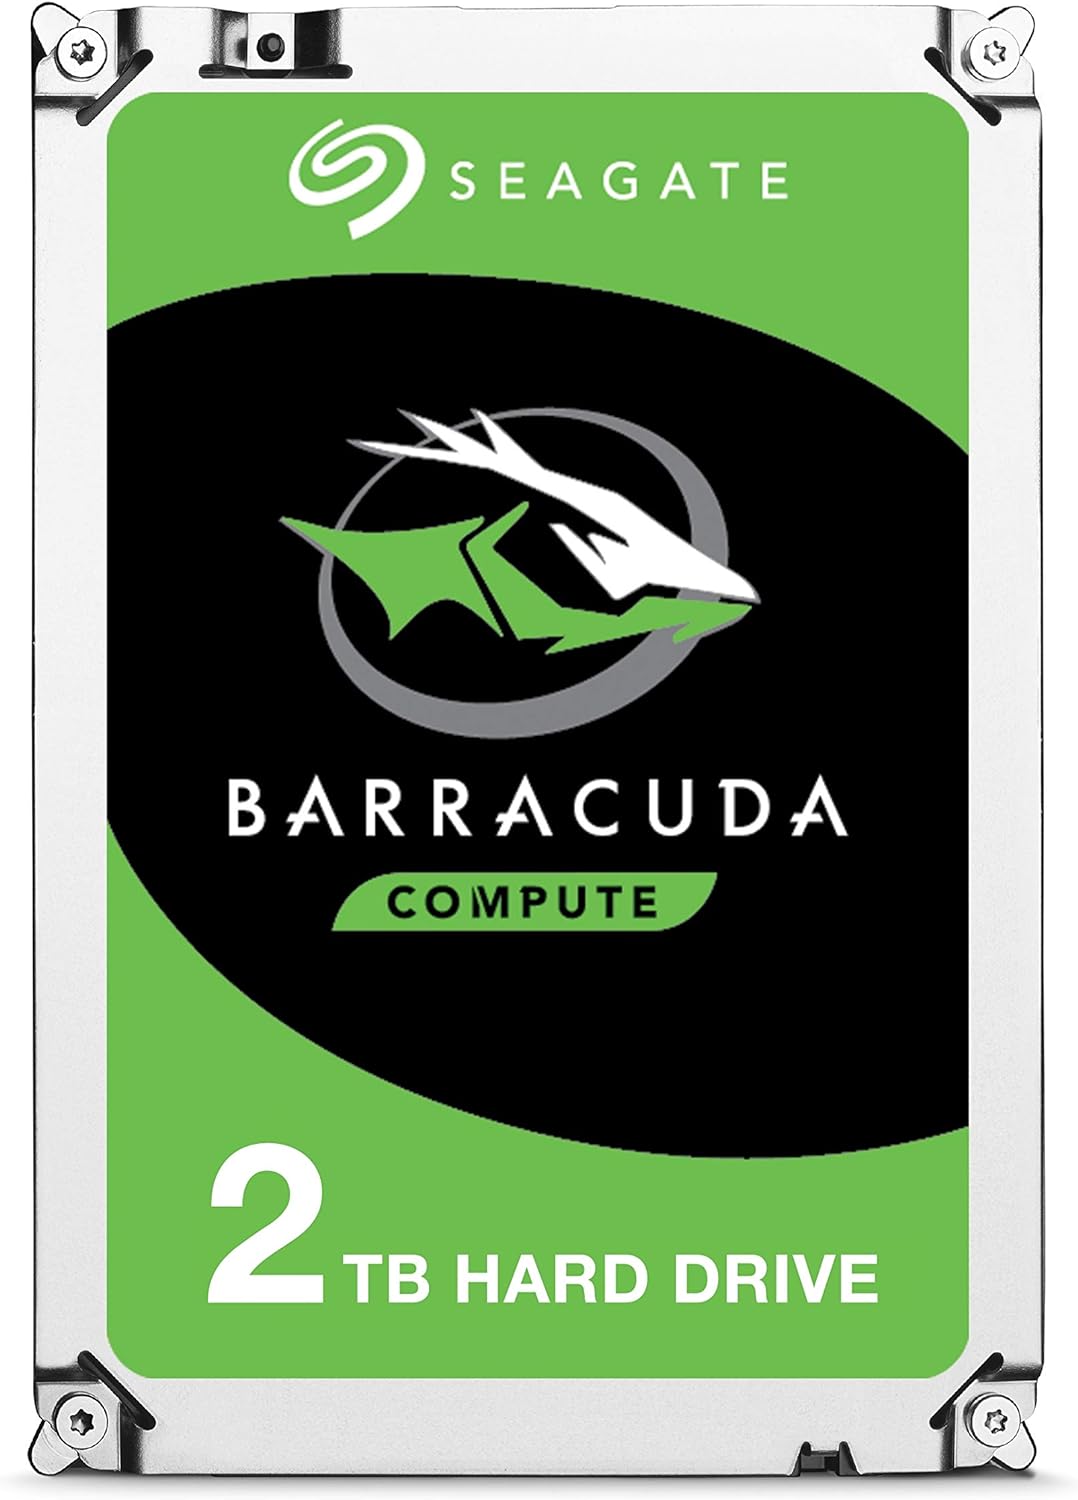 Seagate Barracuda ST2000DM008 2 TB 3.5" Internal Hard Drive - SATA - $38